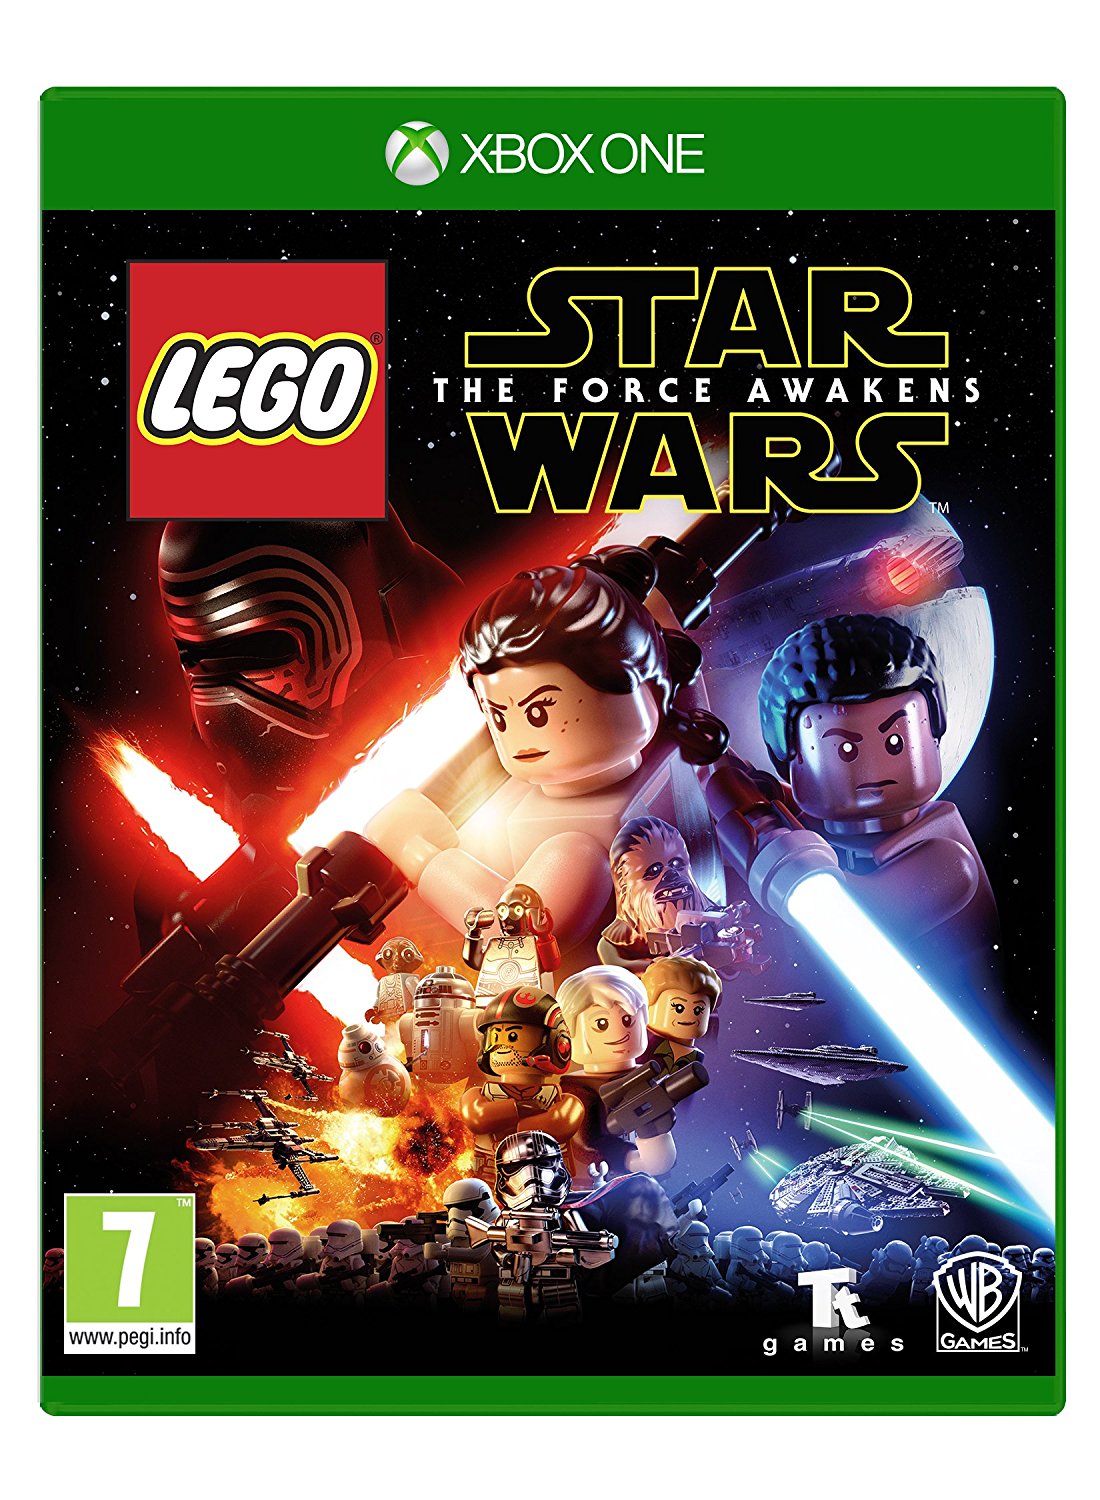 Star wars the force awakens digital download release date